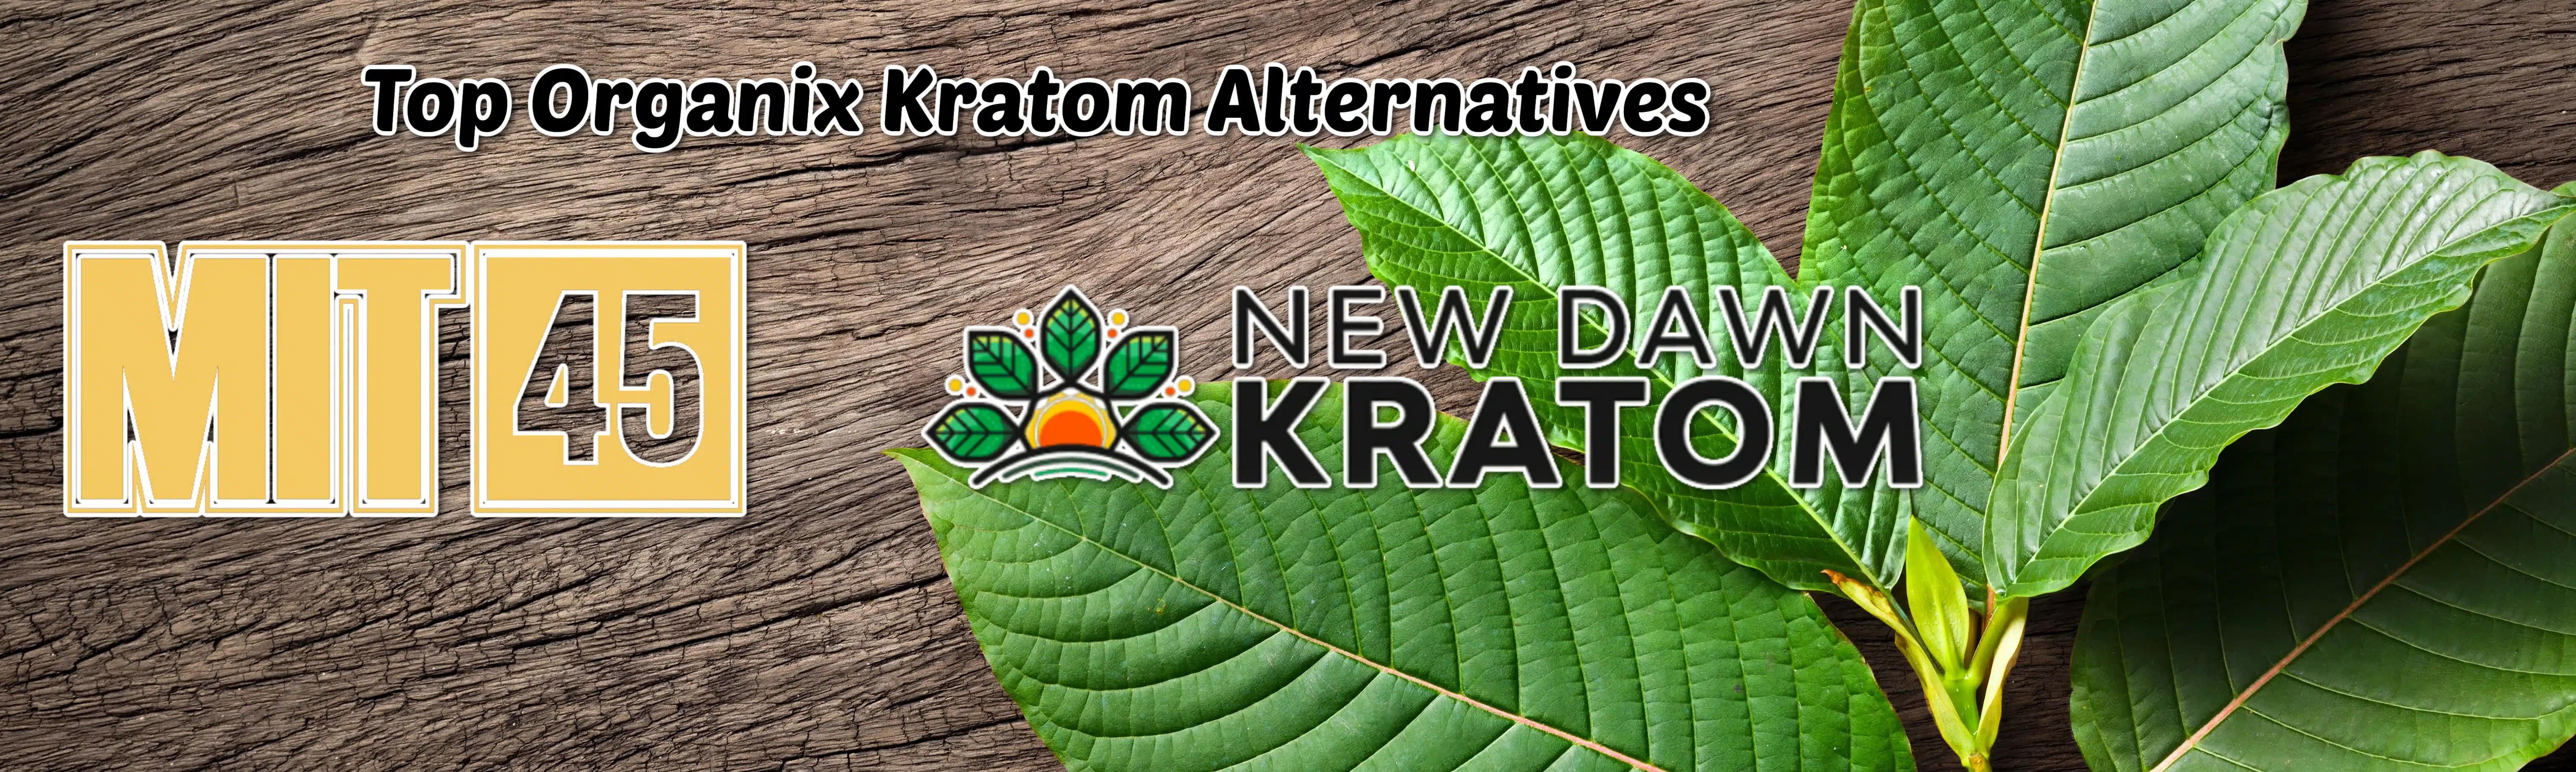 "Top organix kratom alternatives" with MIT45 and New Dawn Kratom logos